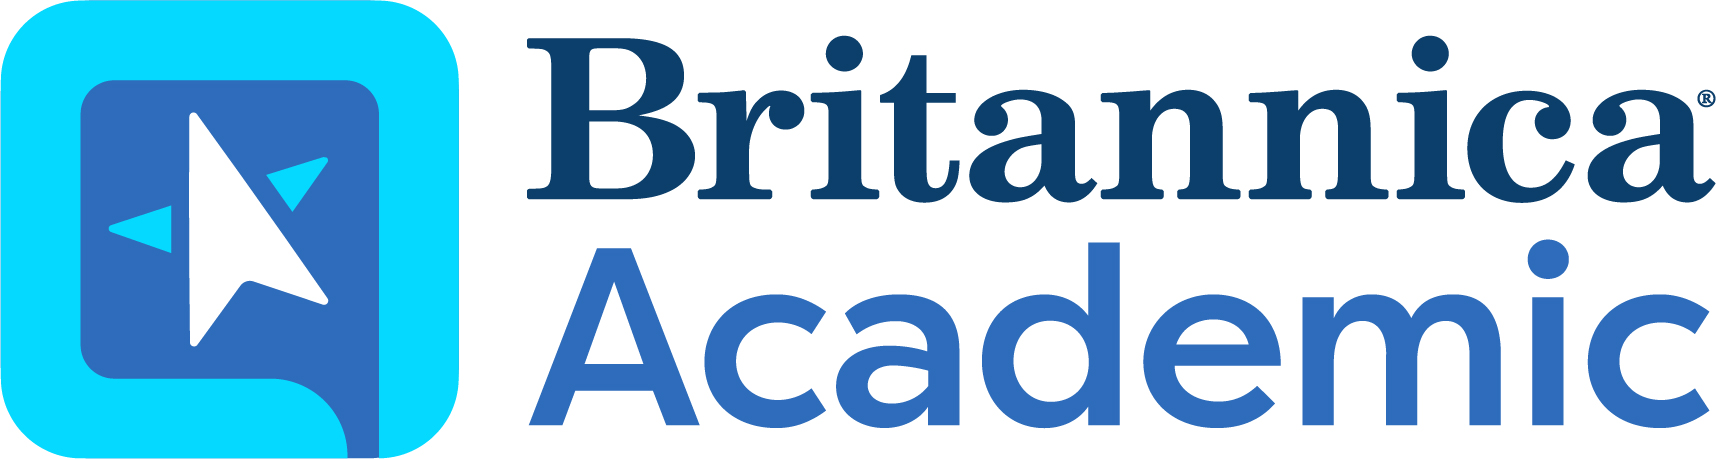 encyclopedia britannica online logo